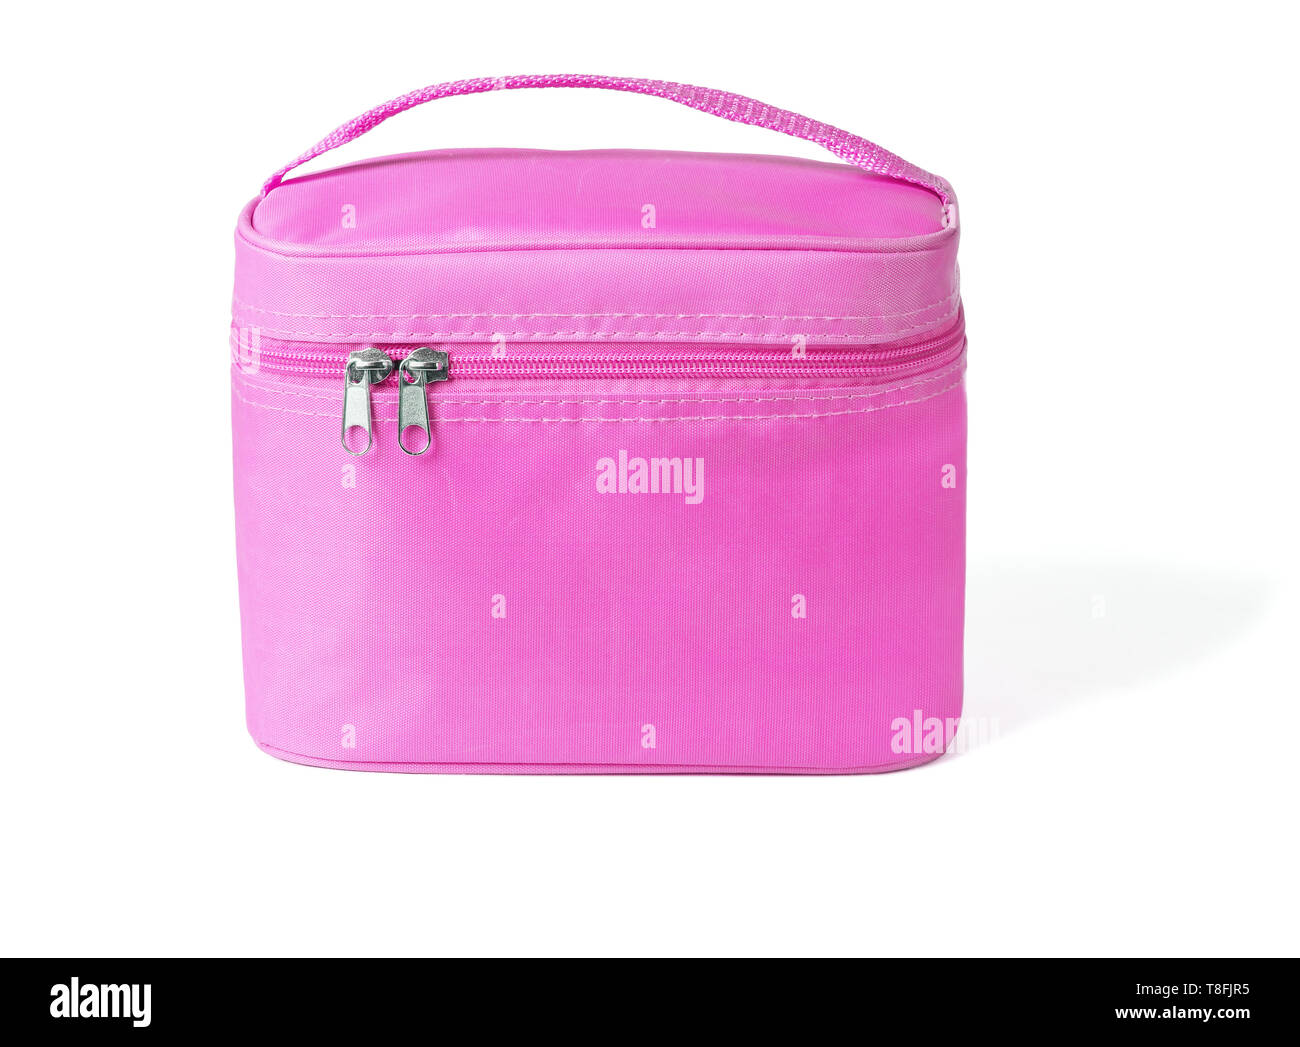 Pink Vanity Beauty Bag on White Background Stock Photo